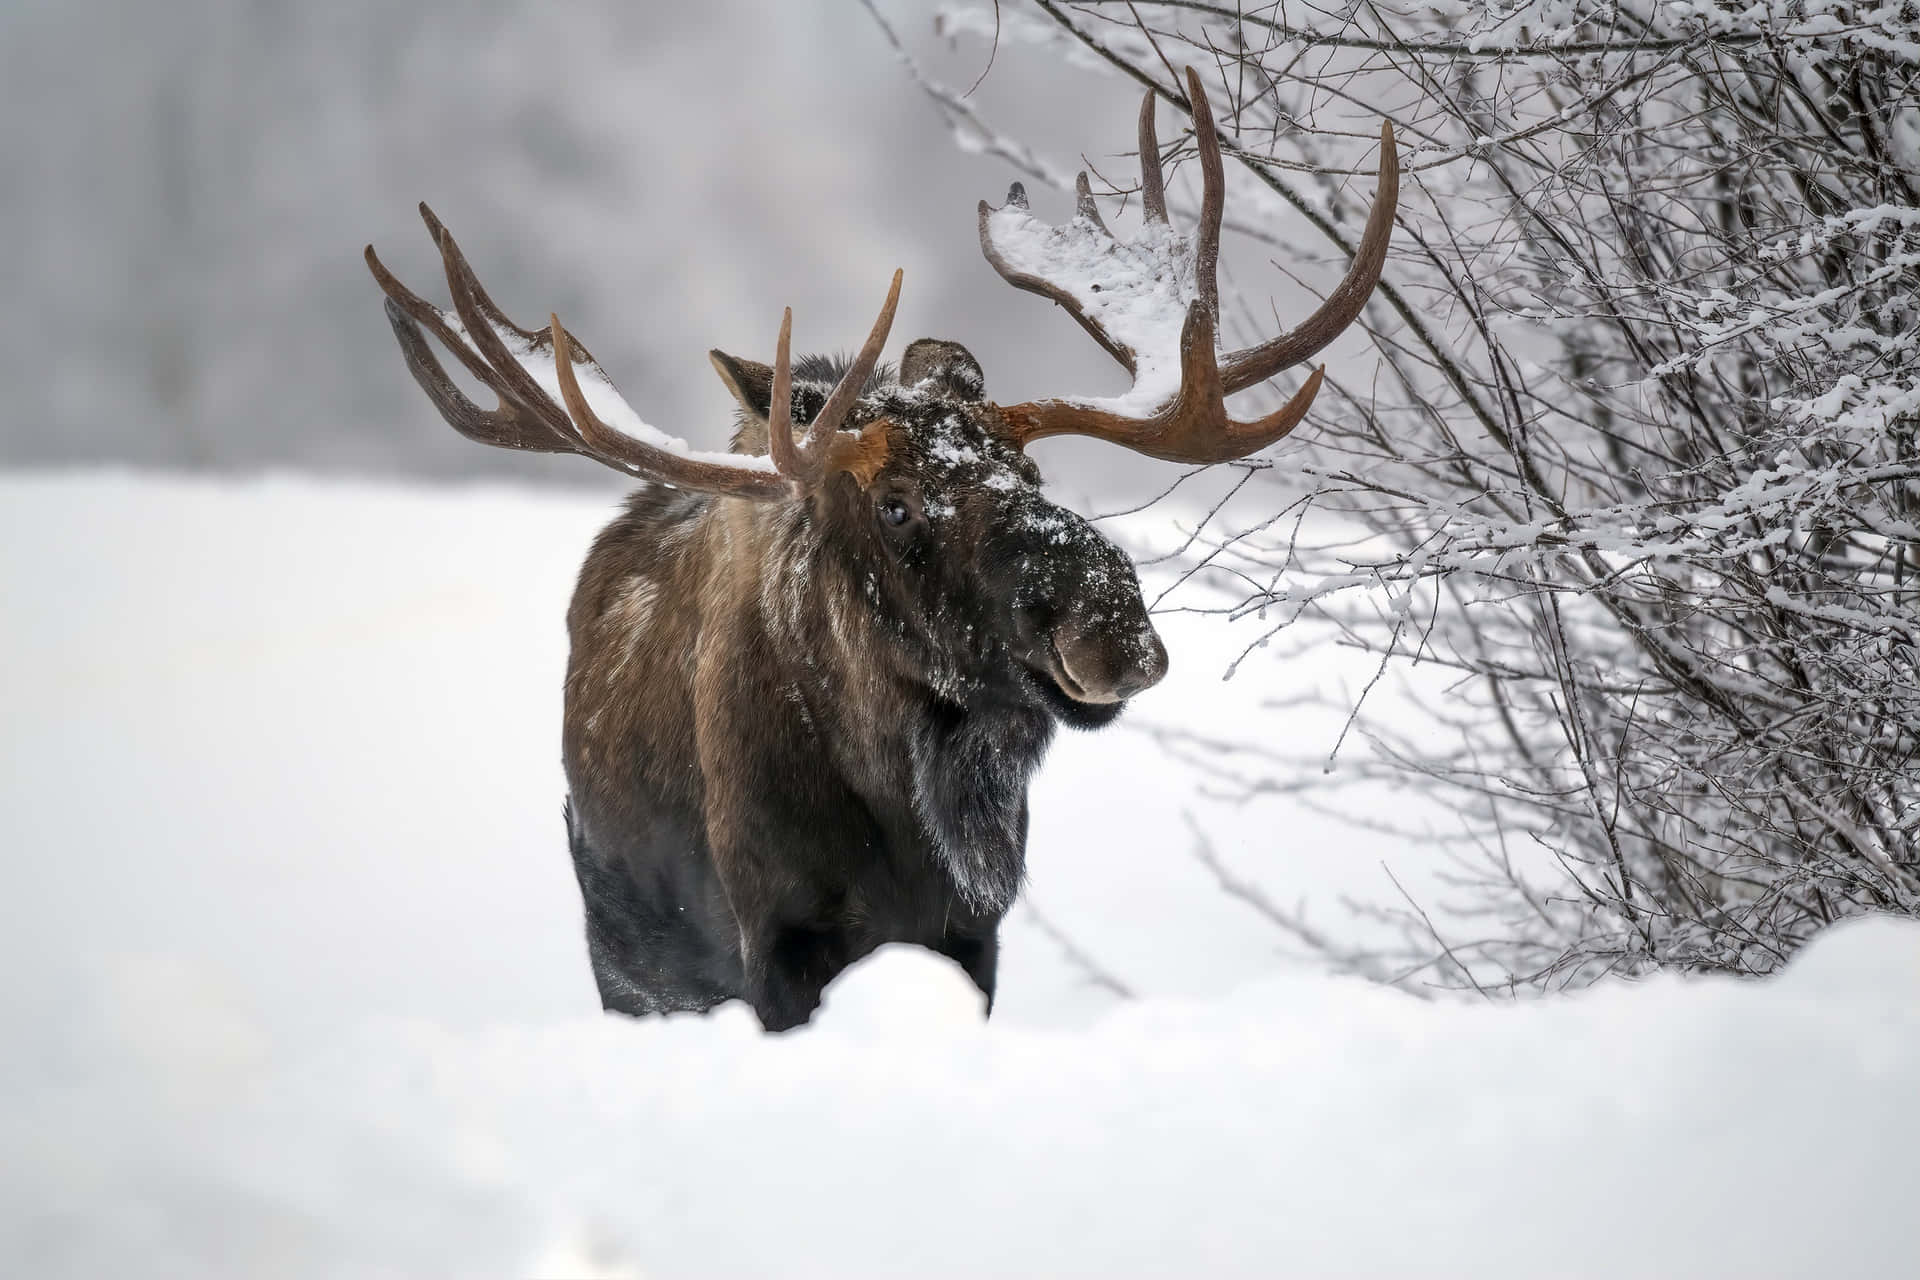 Majestic Moosein Winter Wonderland.jpg Background